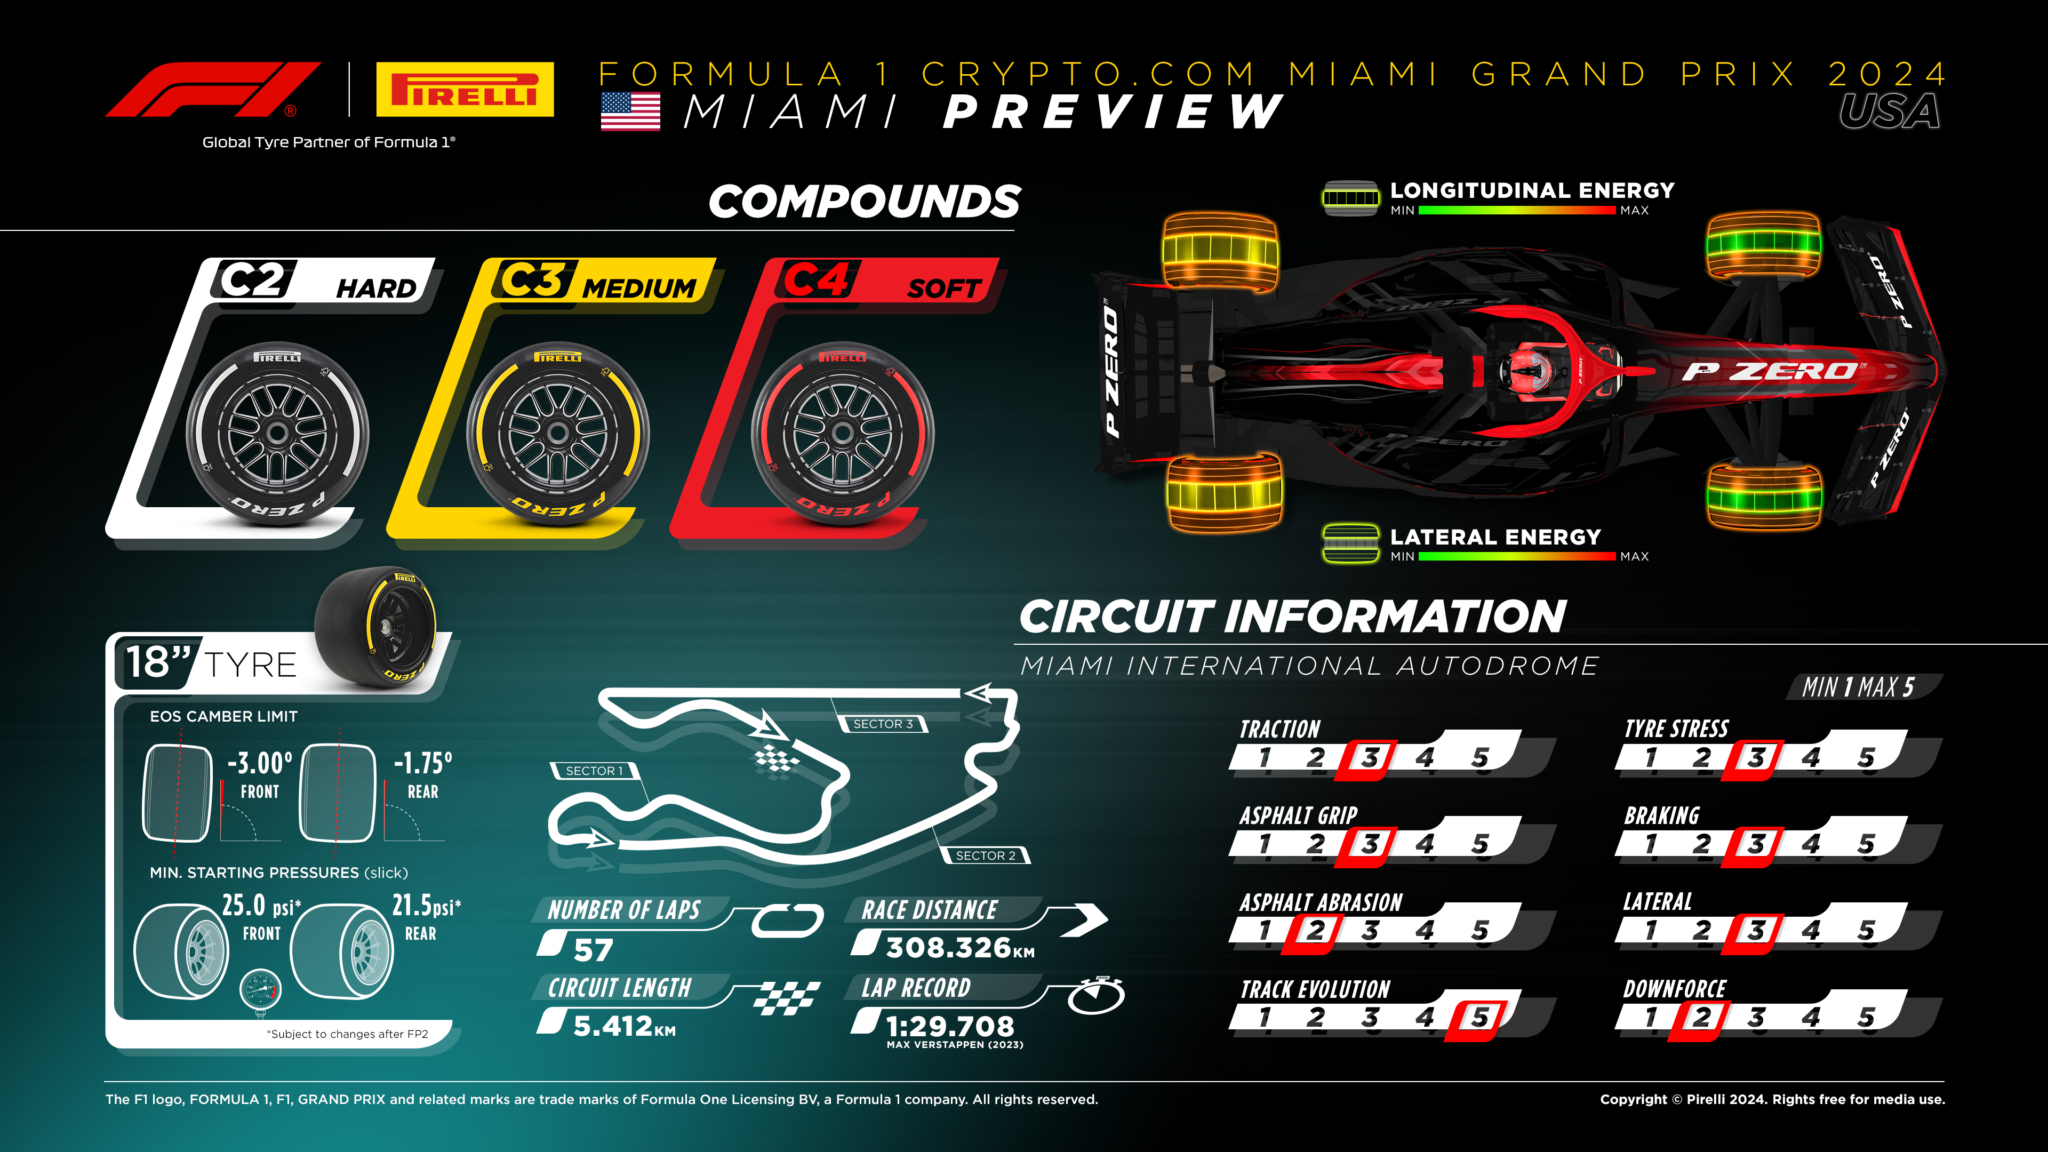 Pirelli celebrates the Miami Grand Prix with a special Podium Cap